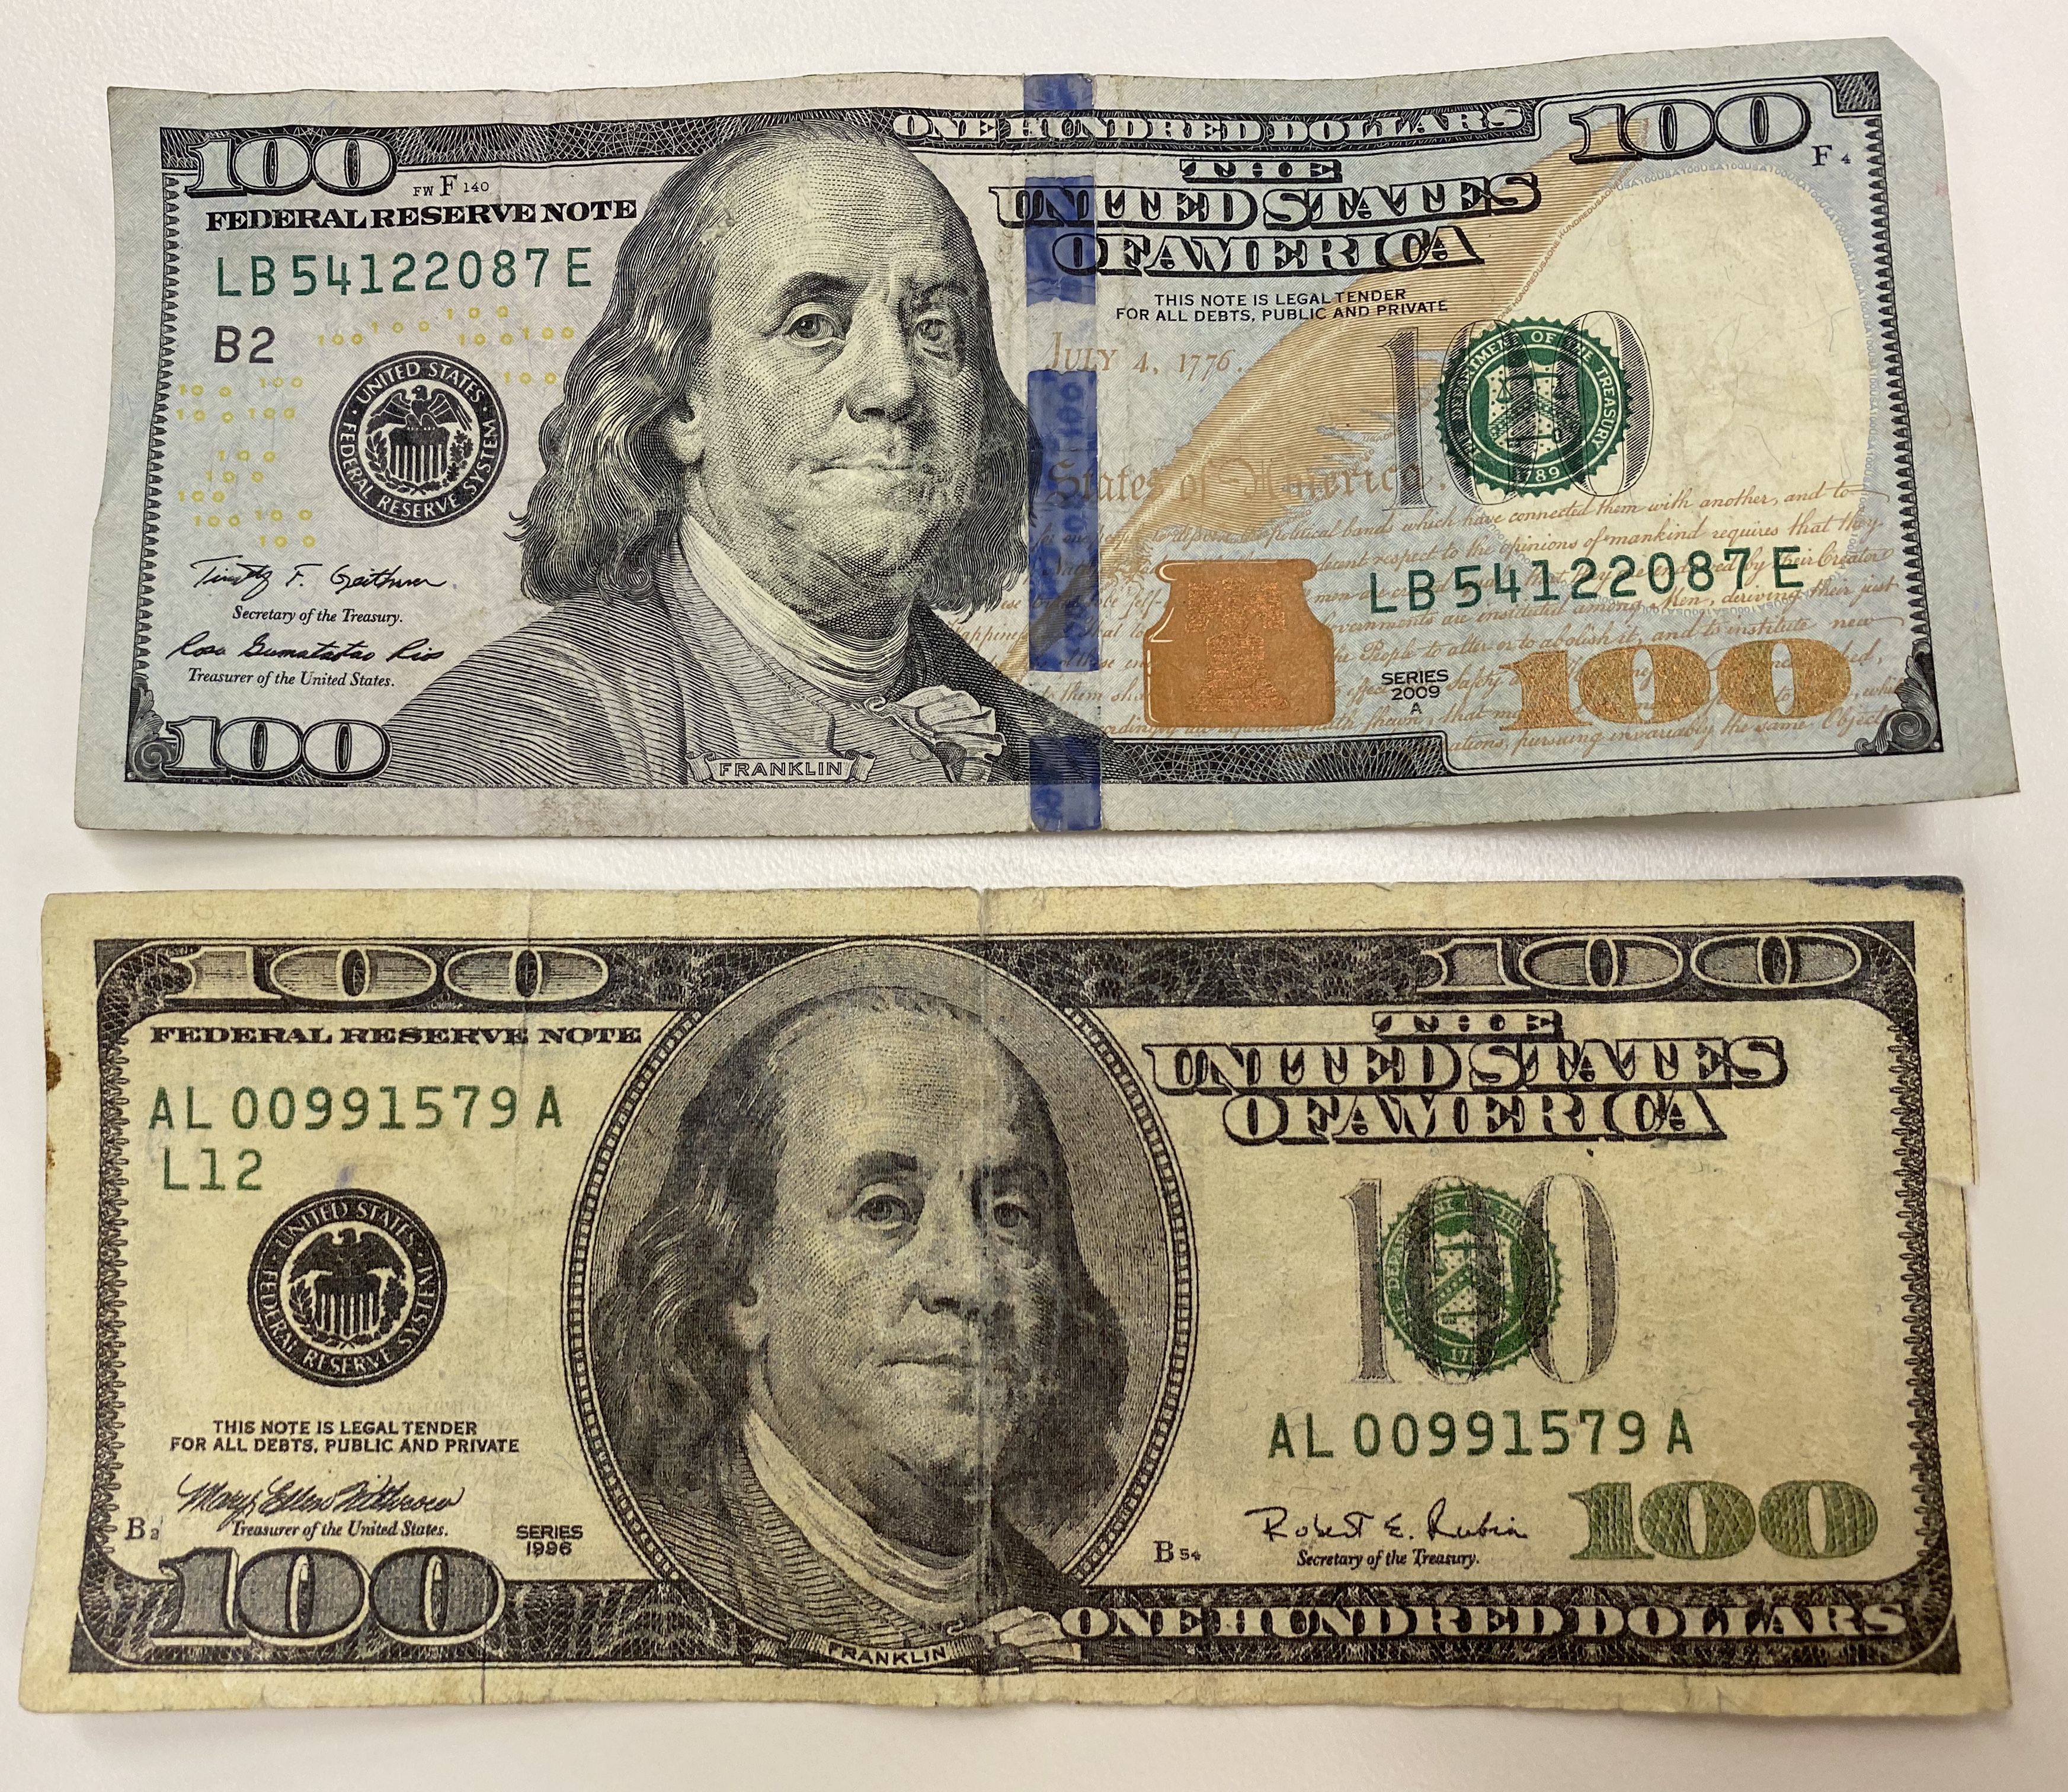 Fake $100 bills showing up here